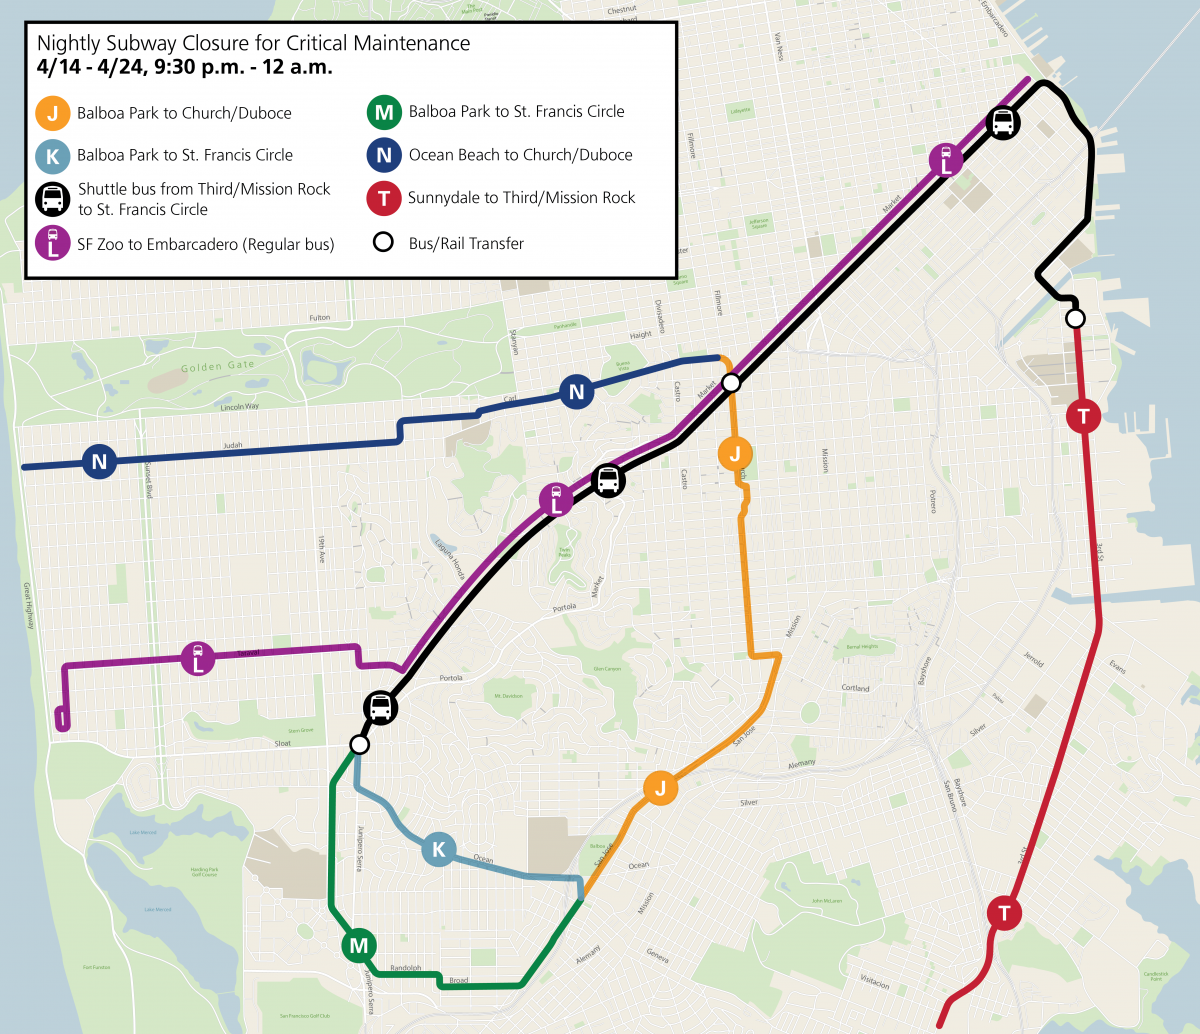 Night Subway Closure Map, April 2022